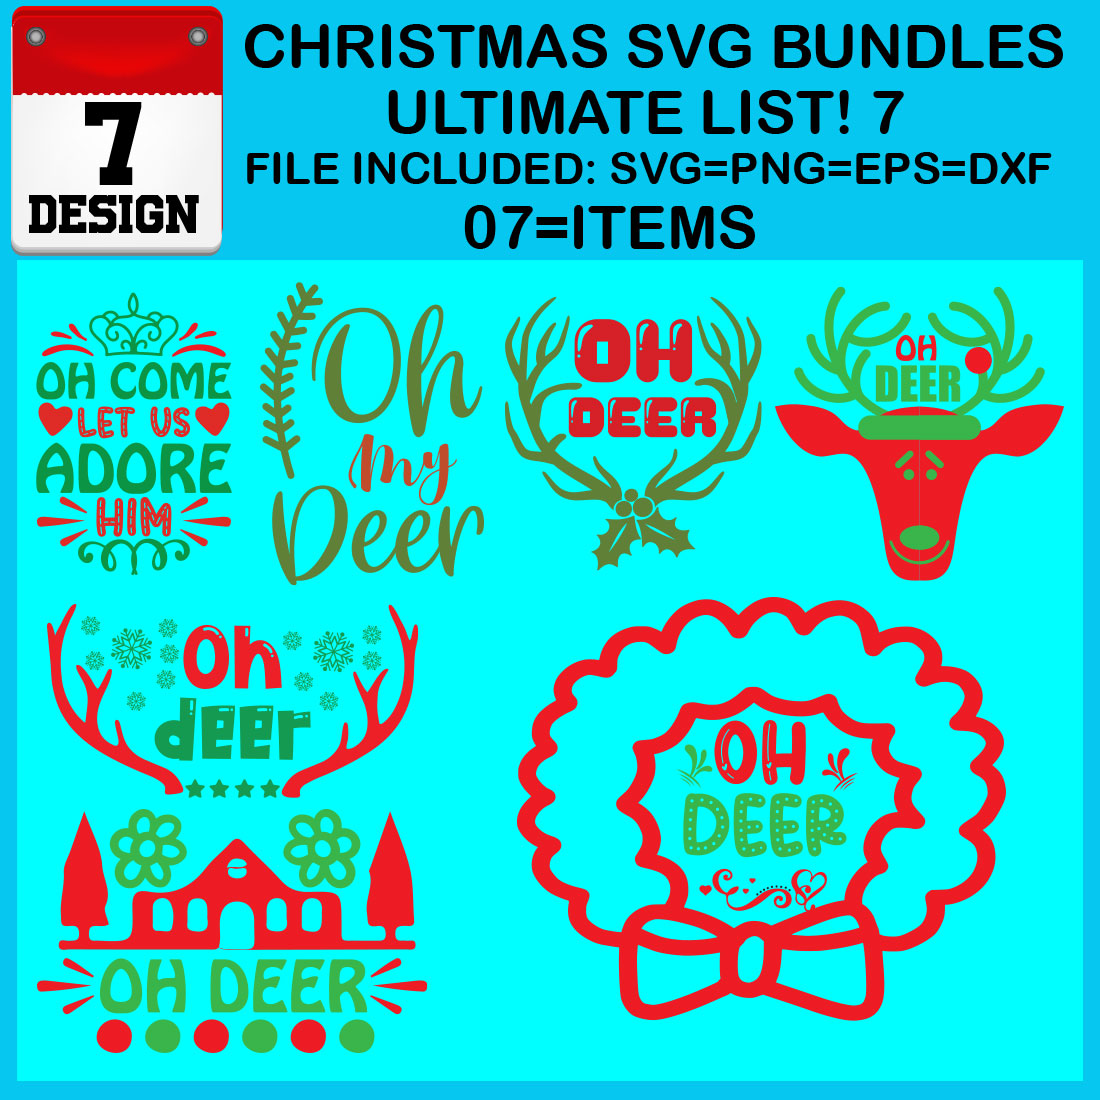 Free Ultimate List! 7 Christmas SVG Bundles cover image.